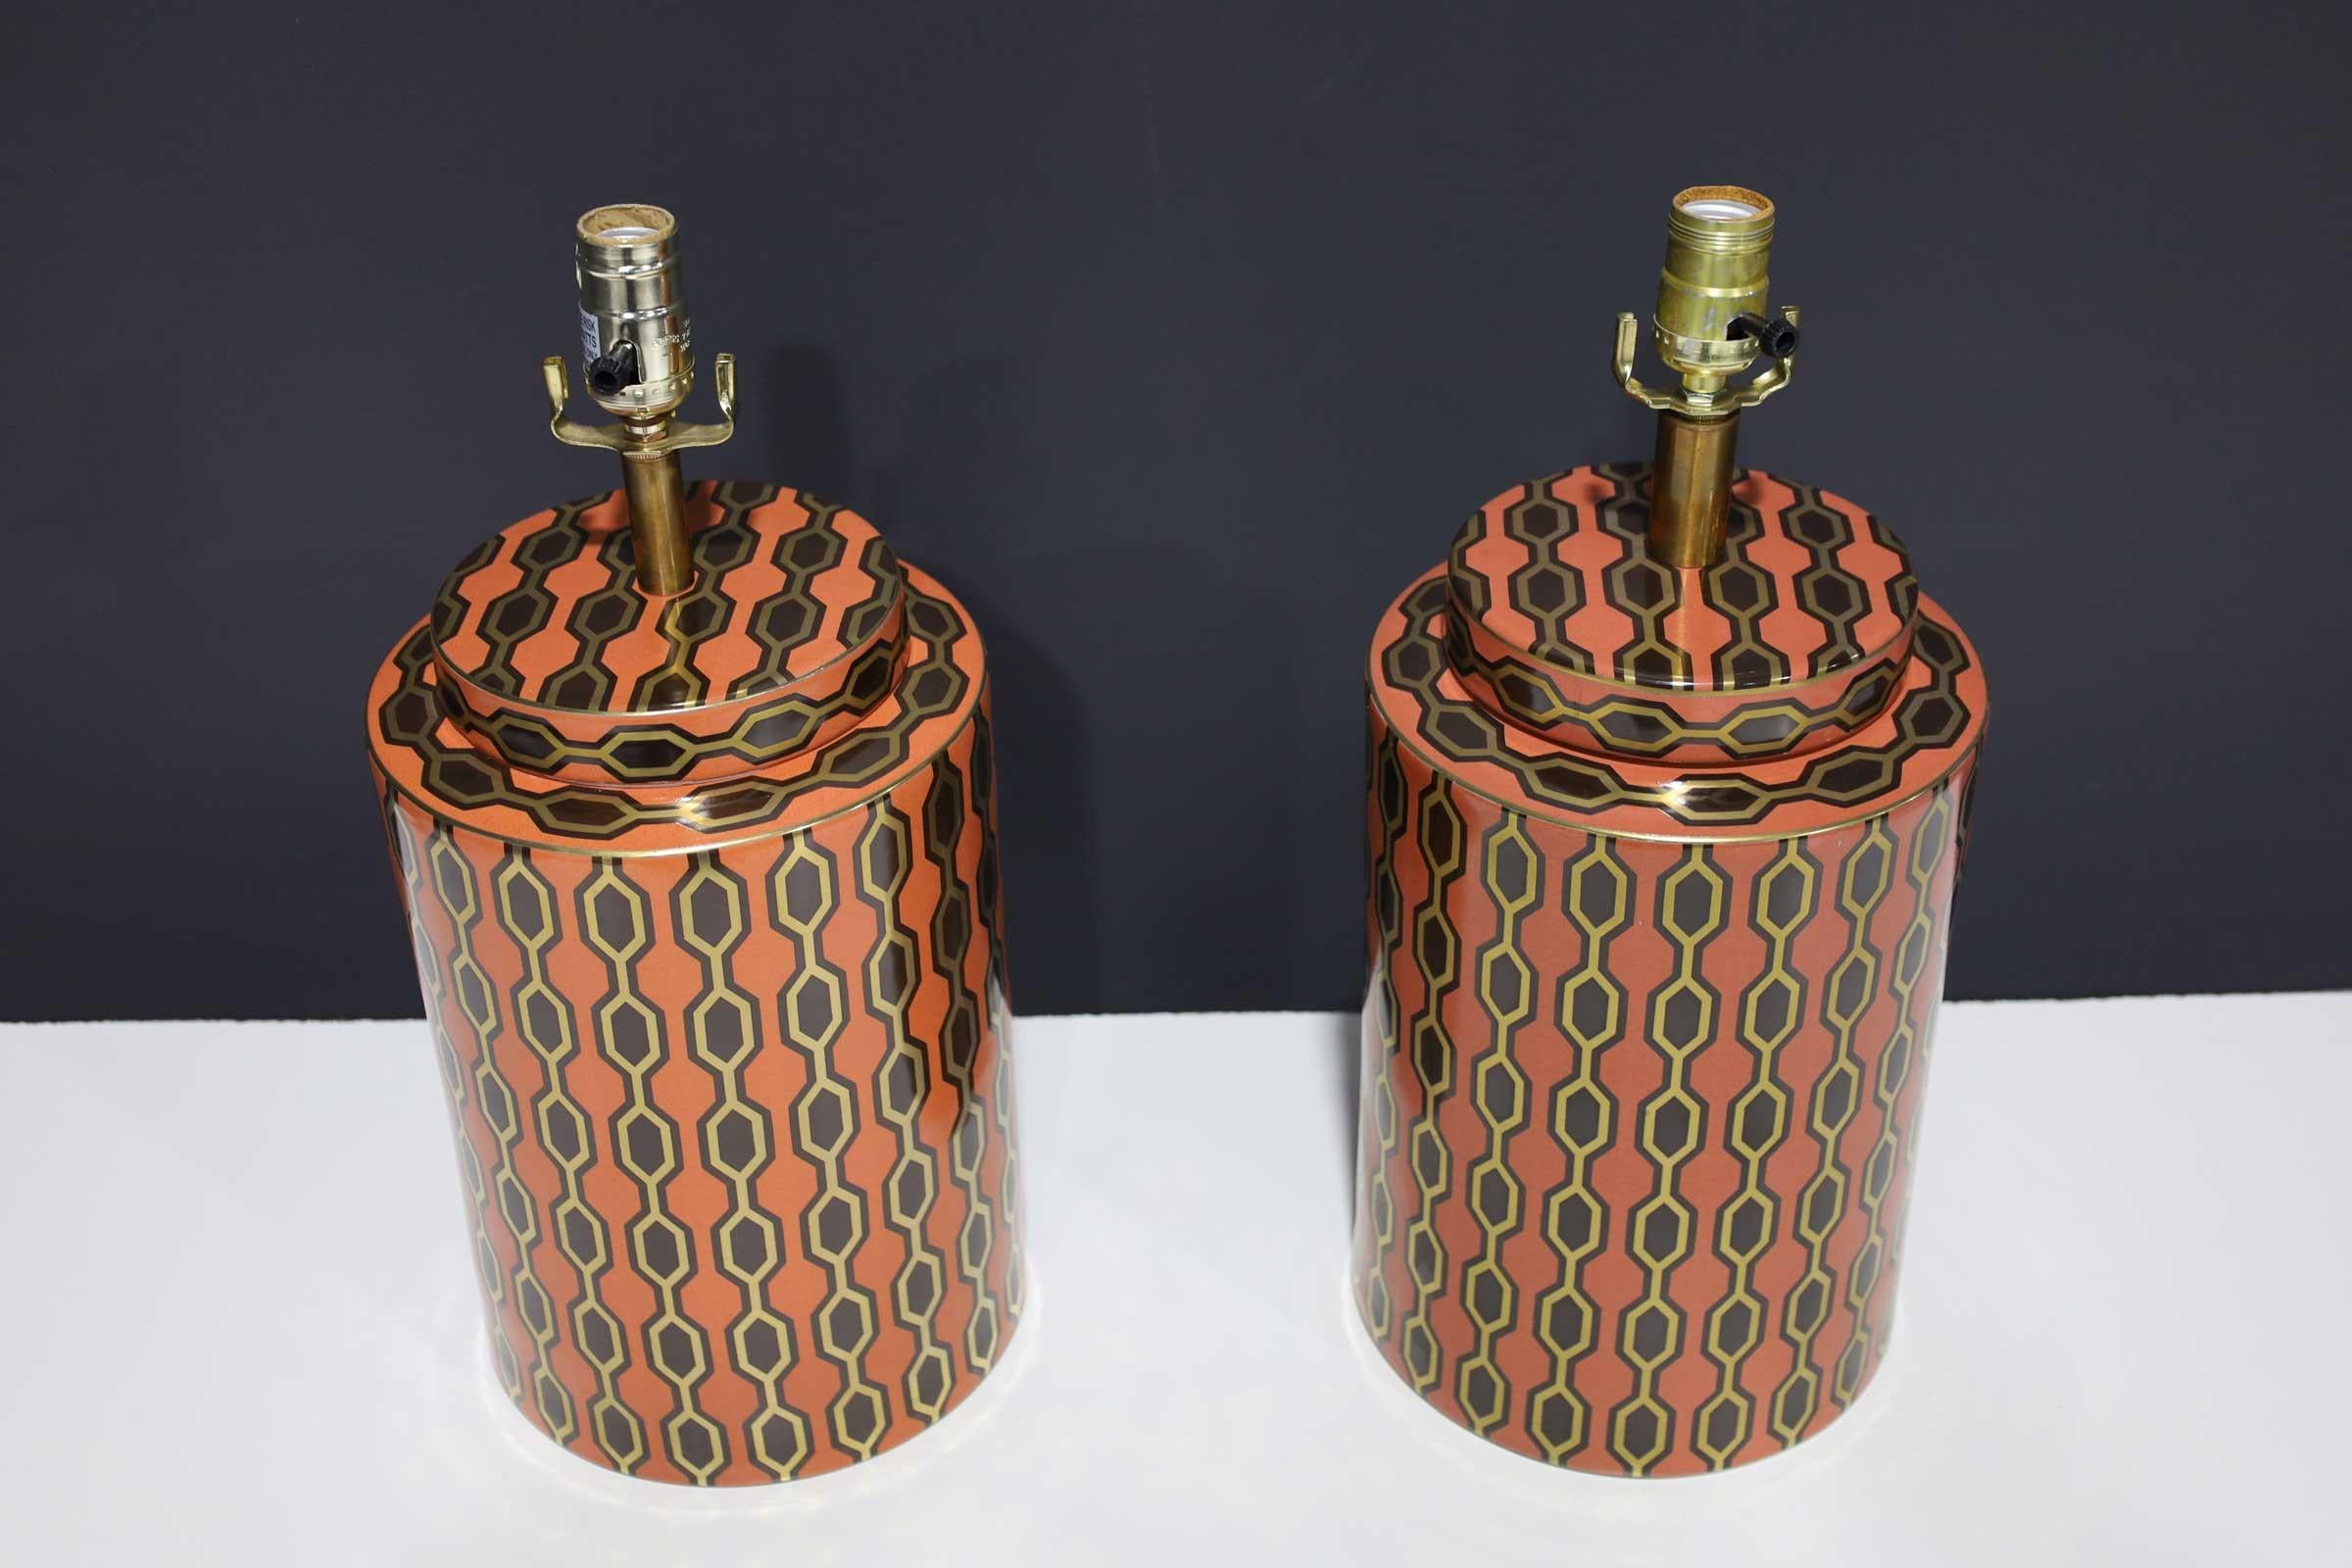 Modern Kelly Hoppen Porcelain Tea Jar Lamps in Orange, Gold and Brown Geometric Pattern For Sale